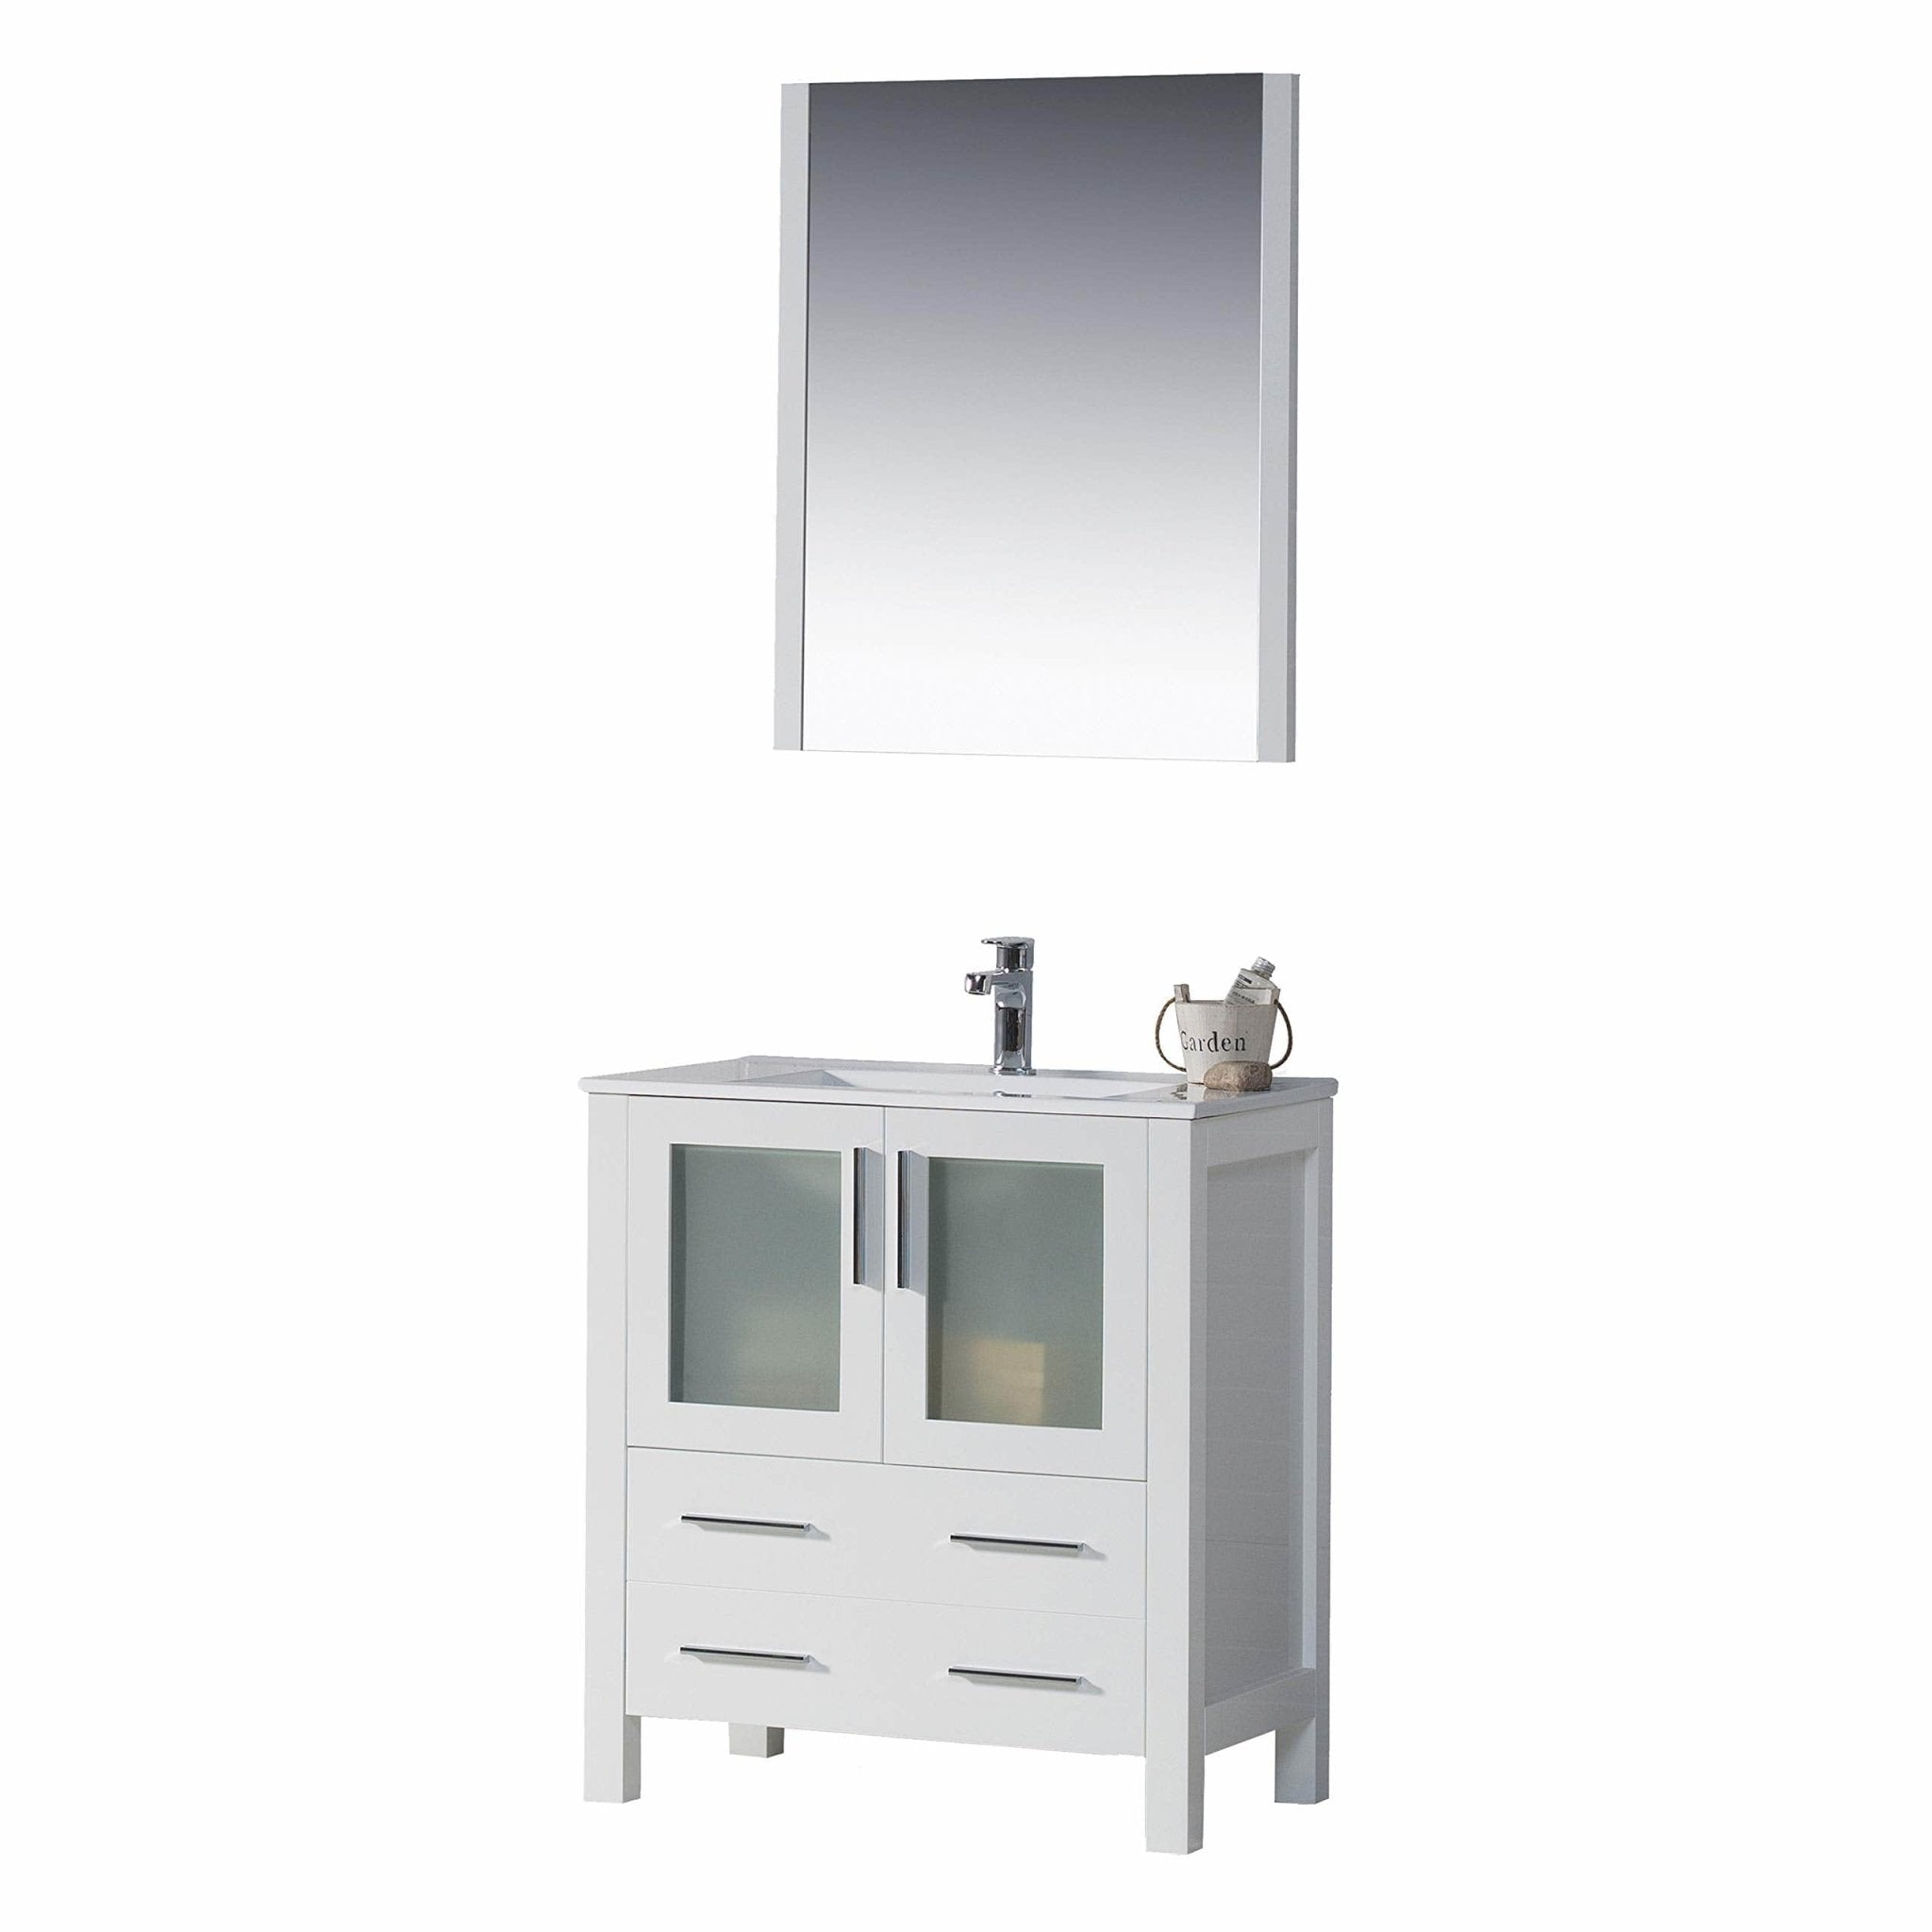 Sydney - 30 Inch Vanity with Ceramic Sink & Mirror - White - Molaix842708124394Sydney001 30 01 C M